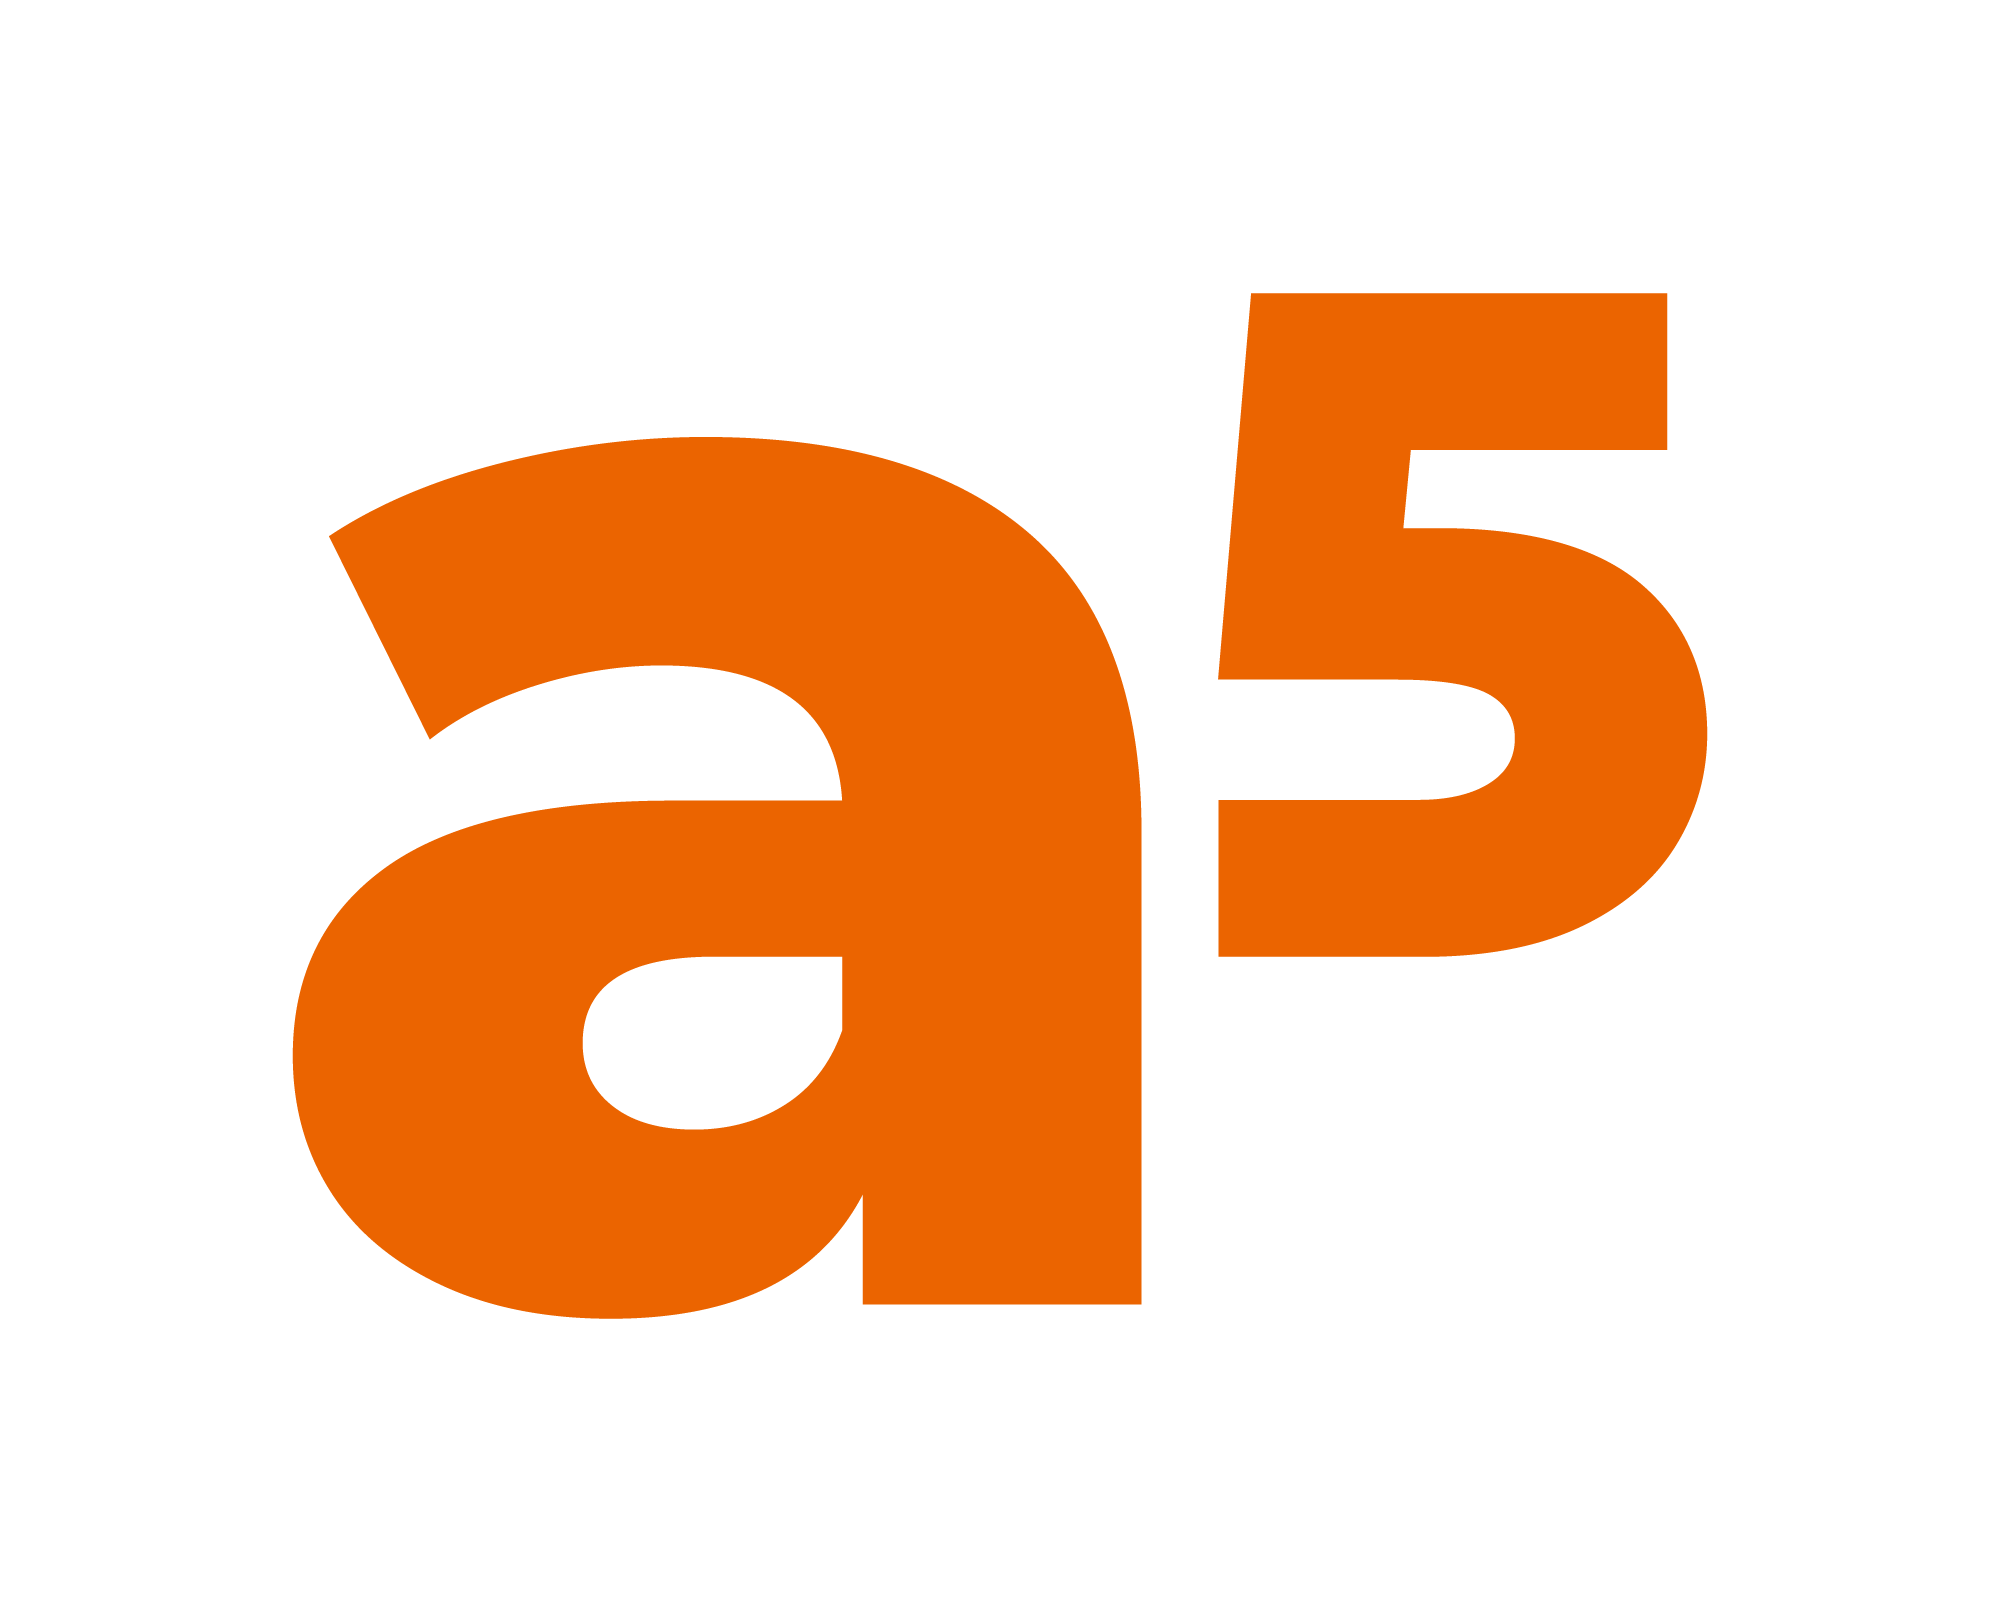 a5 Planung GmbH